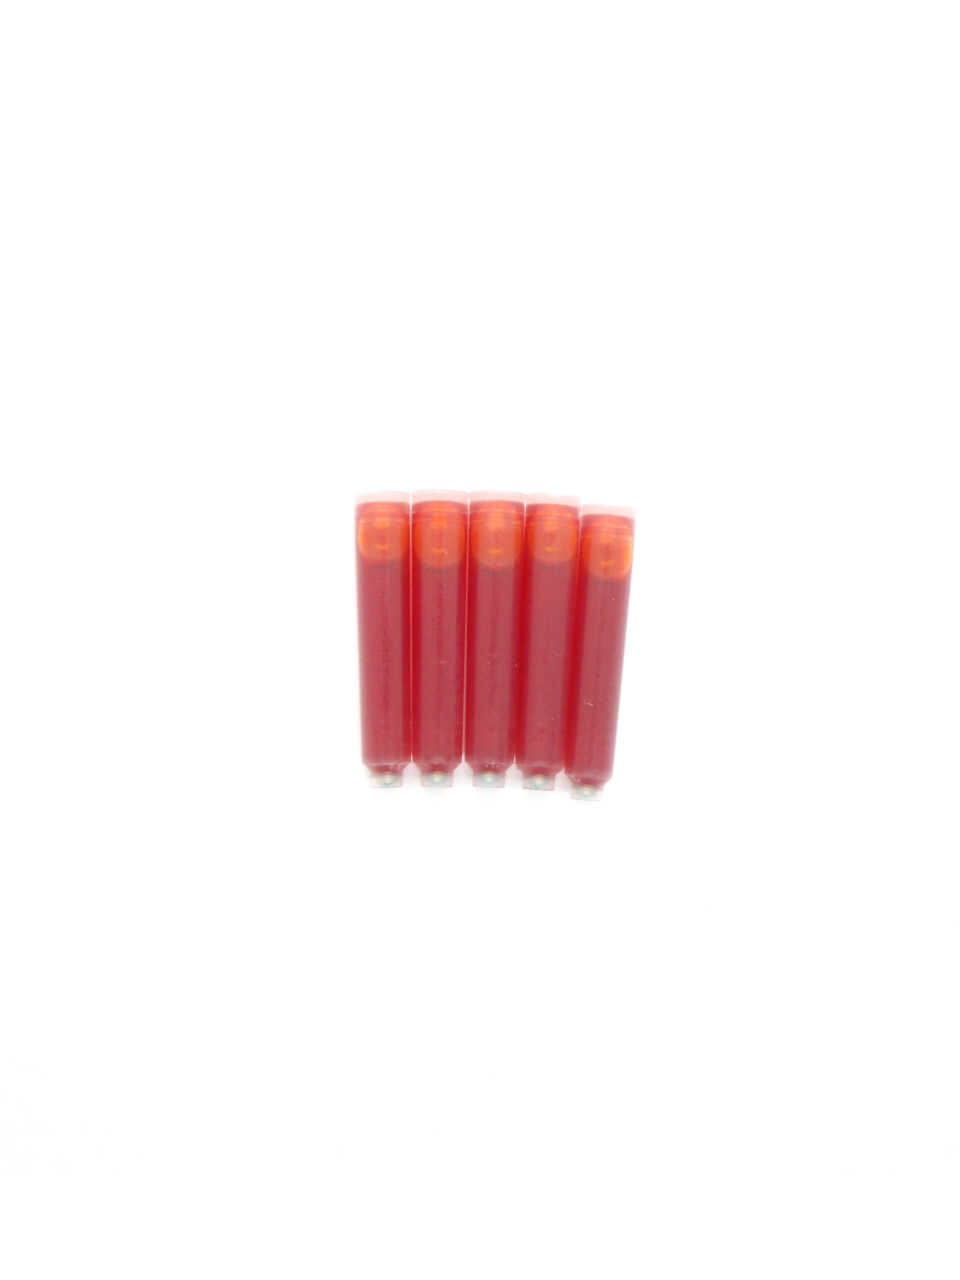 PenConverter Ink Cartridges For Lalex Fountain Pens (Orange)